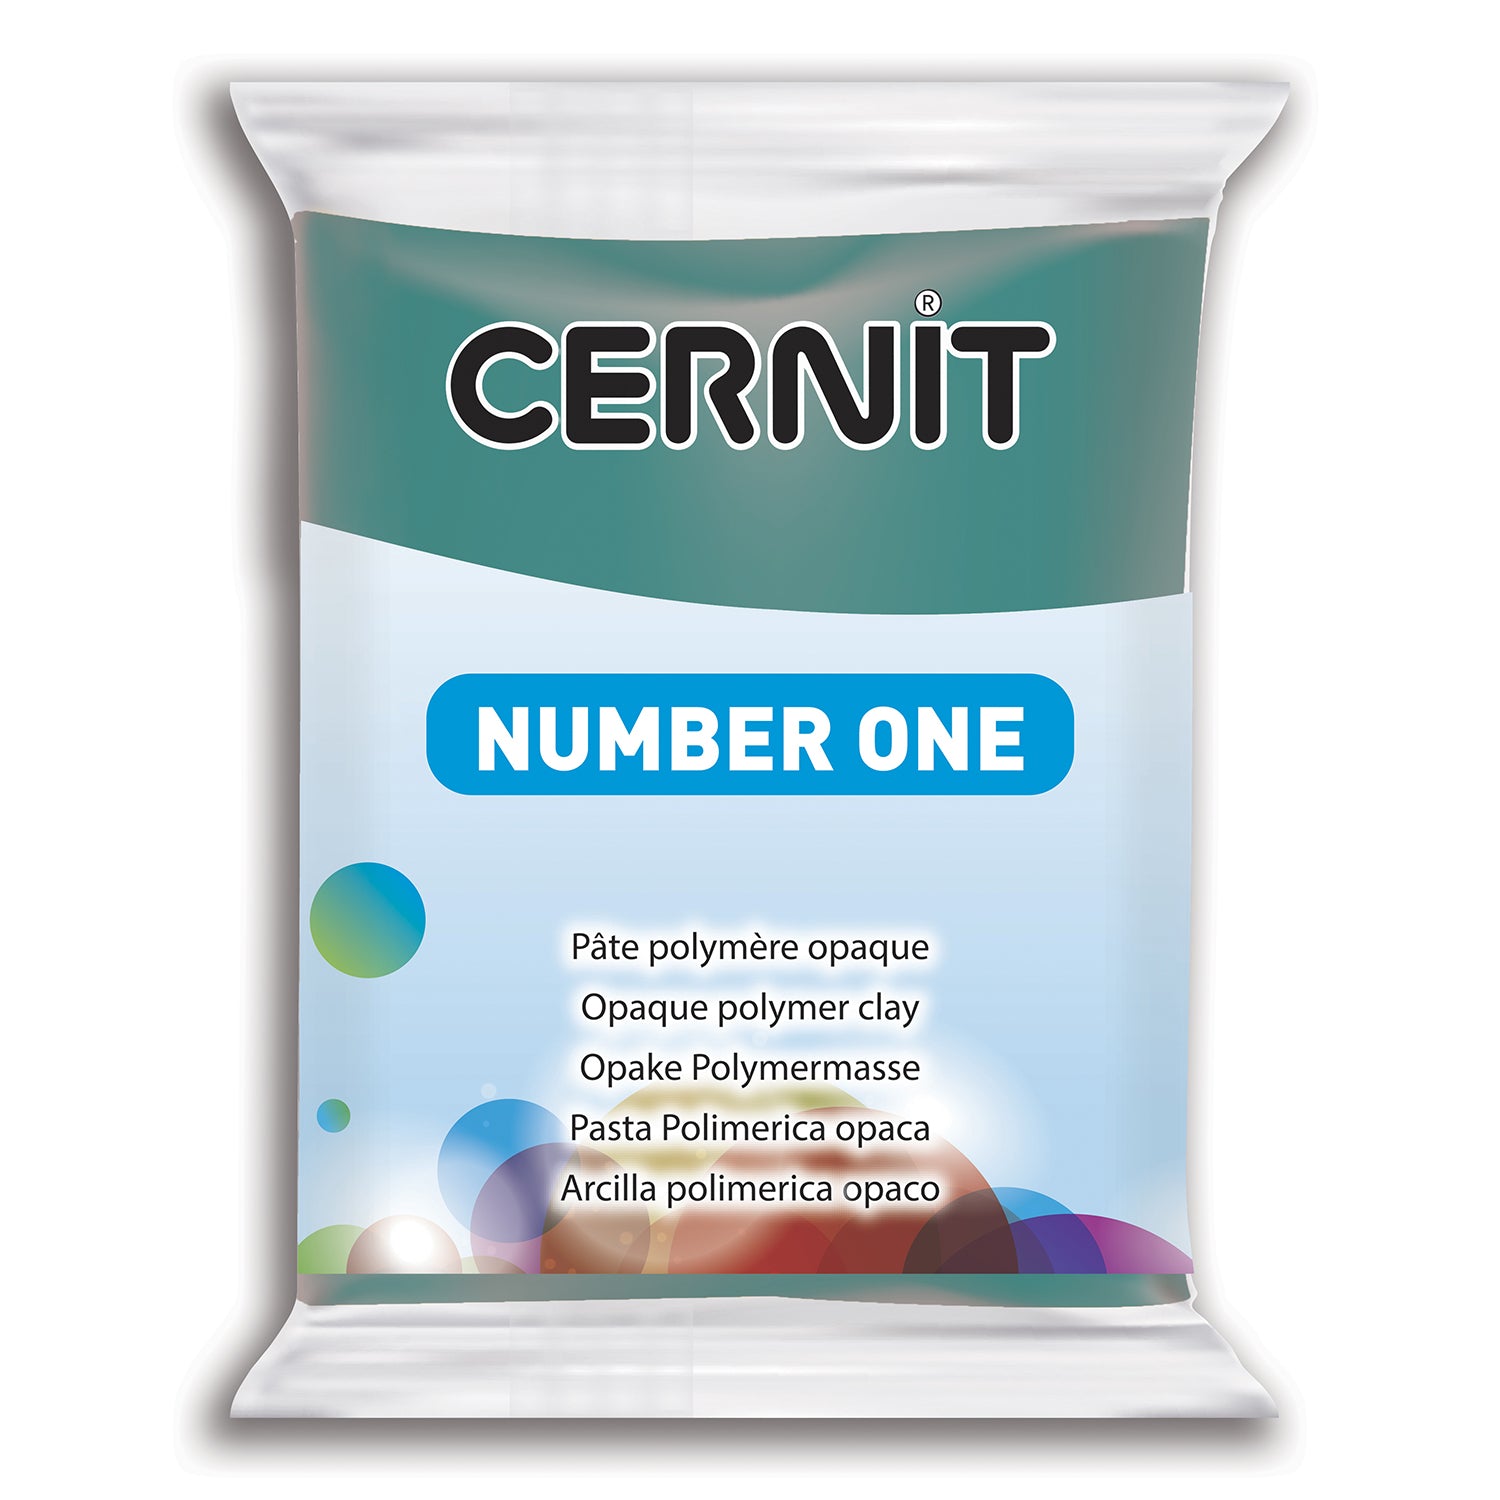 CERNIT Polymer Clay 56g Number One 662 Fir Green